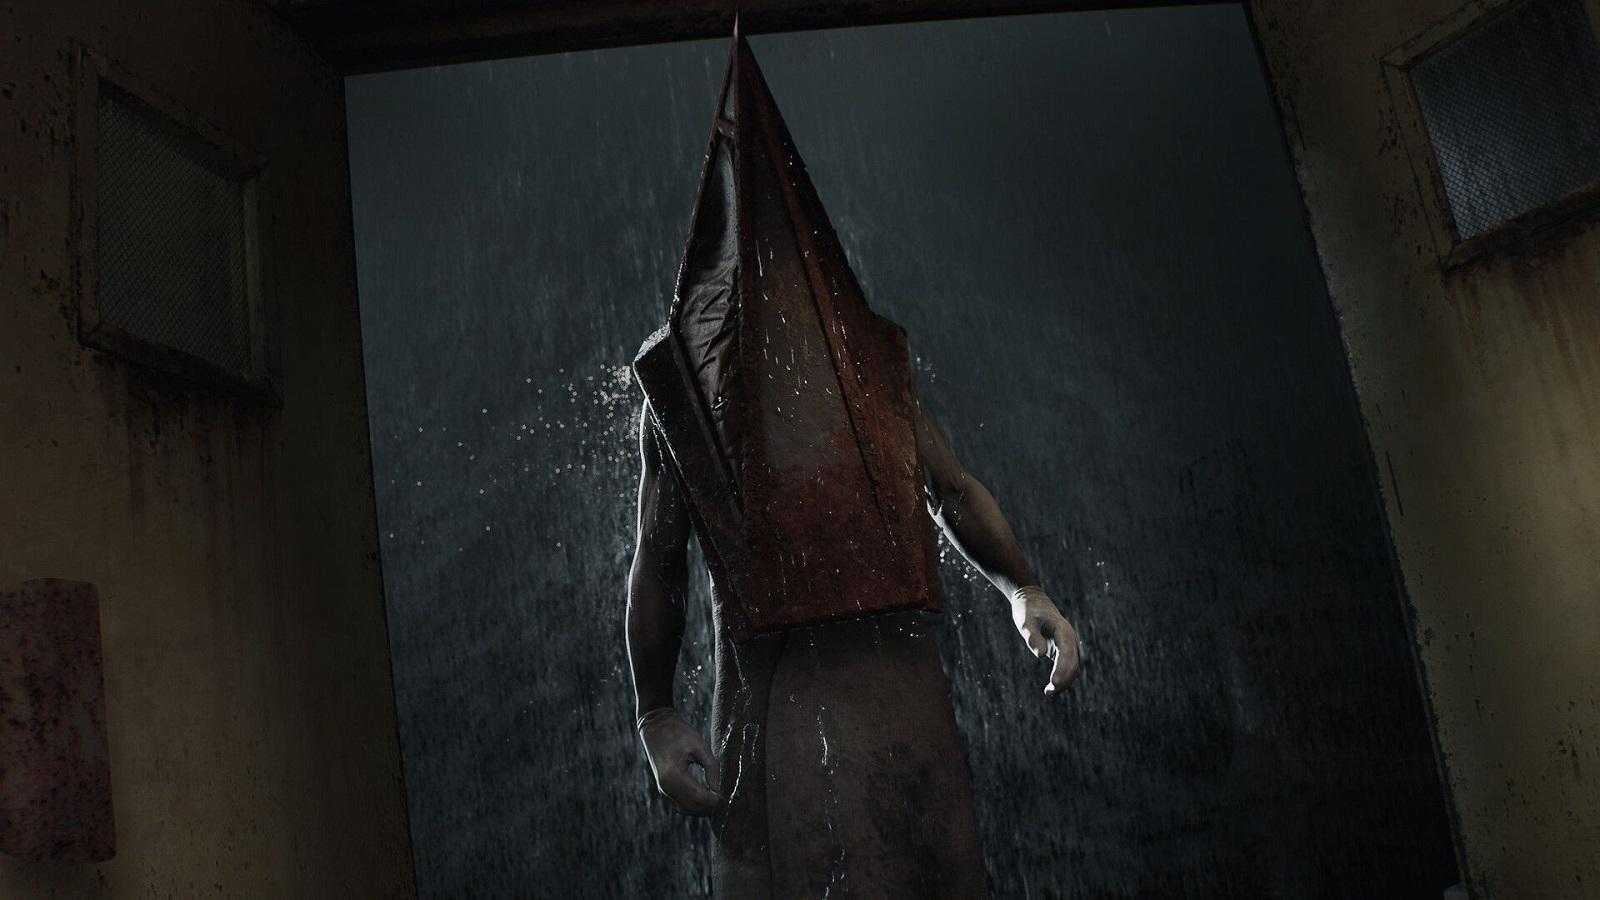 Pyramid Head Silent Hill 2 remake